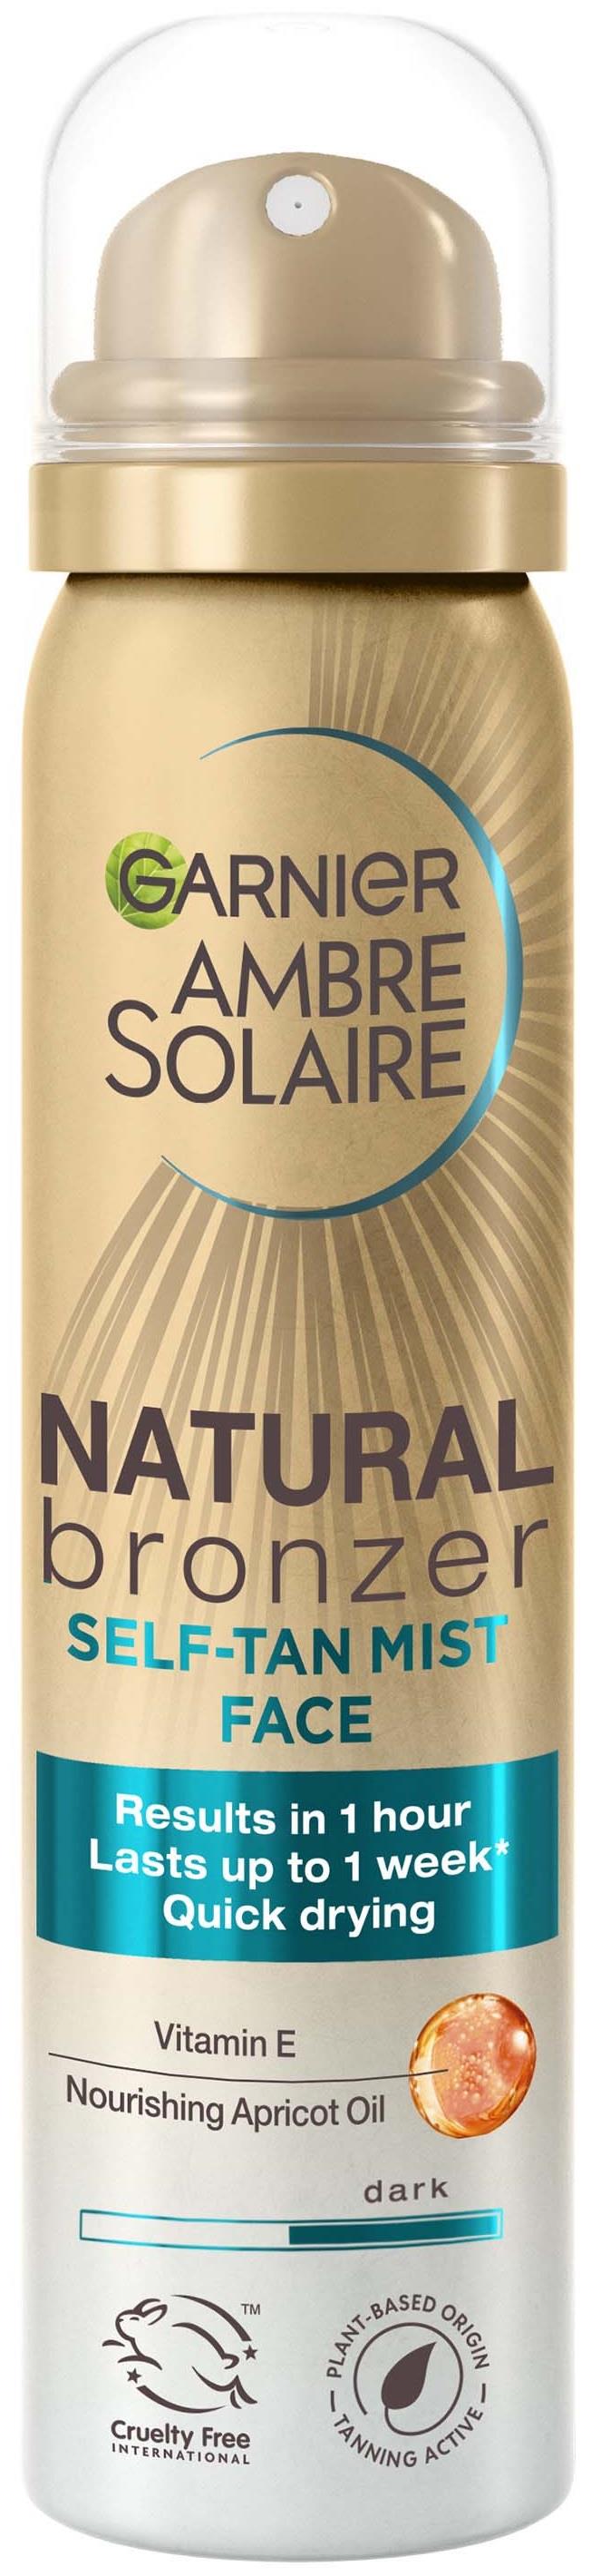 Garnier Ambre Solaire Natural Bronzer Mist Tan Self Face ml 75